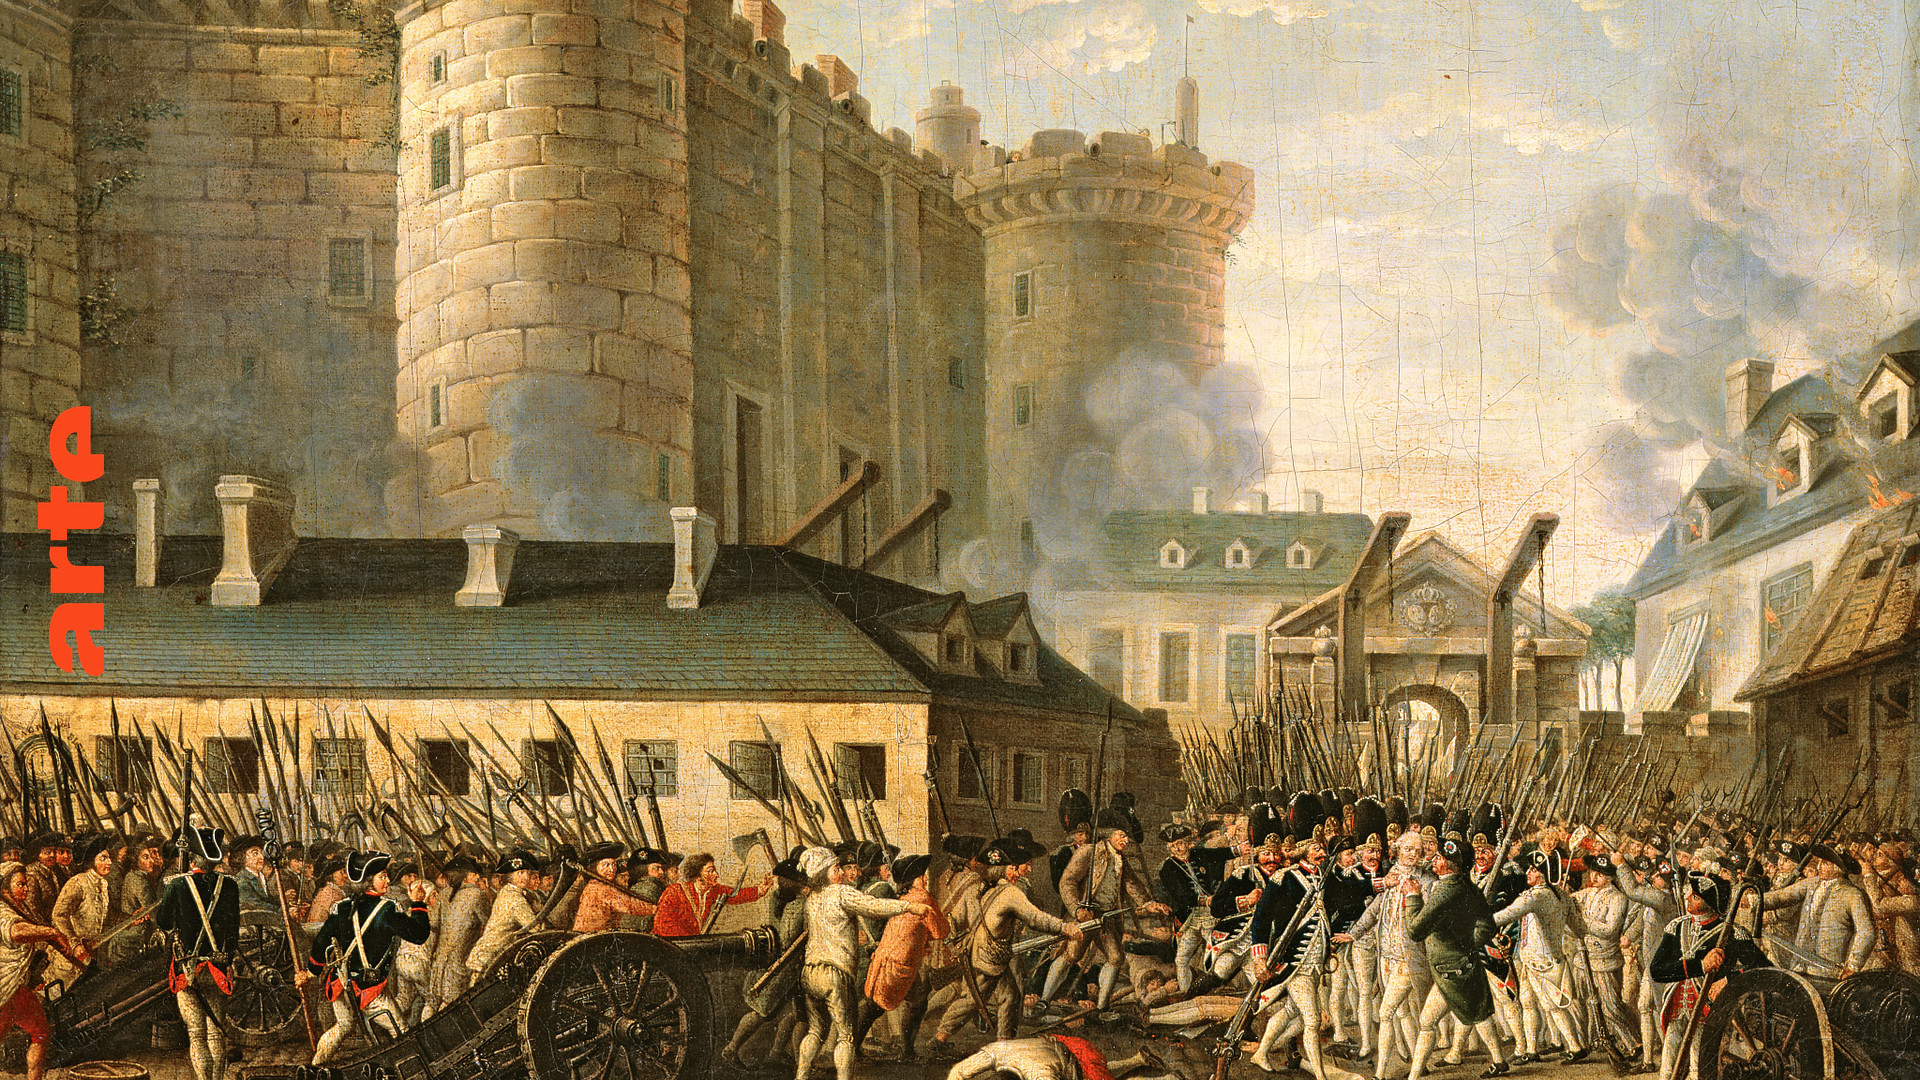 Великая французская революция конца 18 века. Штурм Бастилии 1789. Французская революция взятие Бастилии 1789. Французская революция 1789 штурм Бастилии.